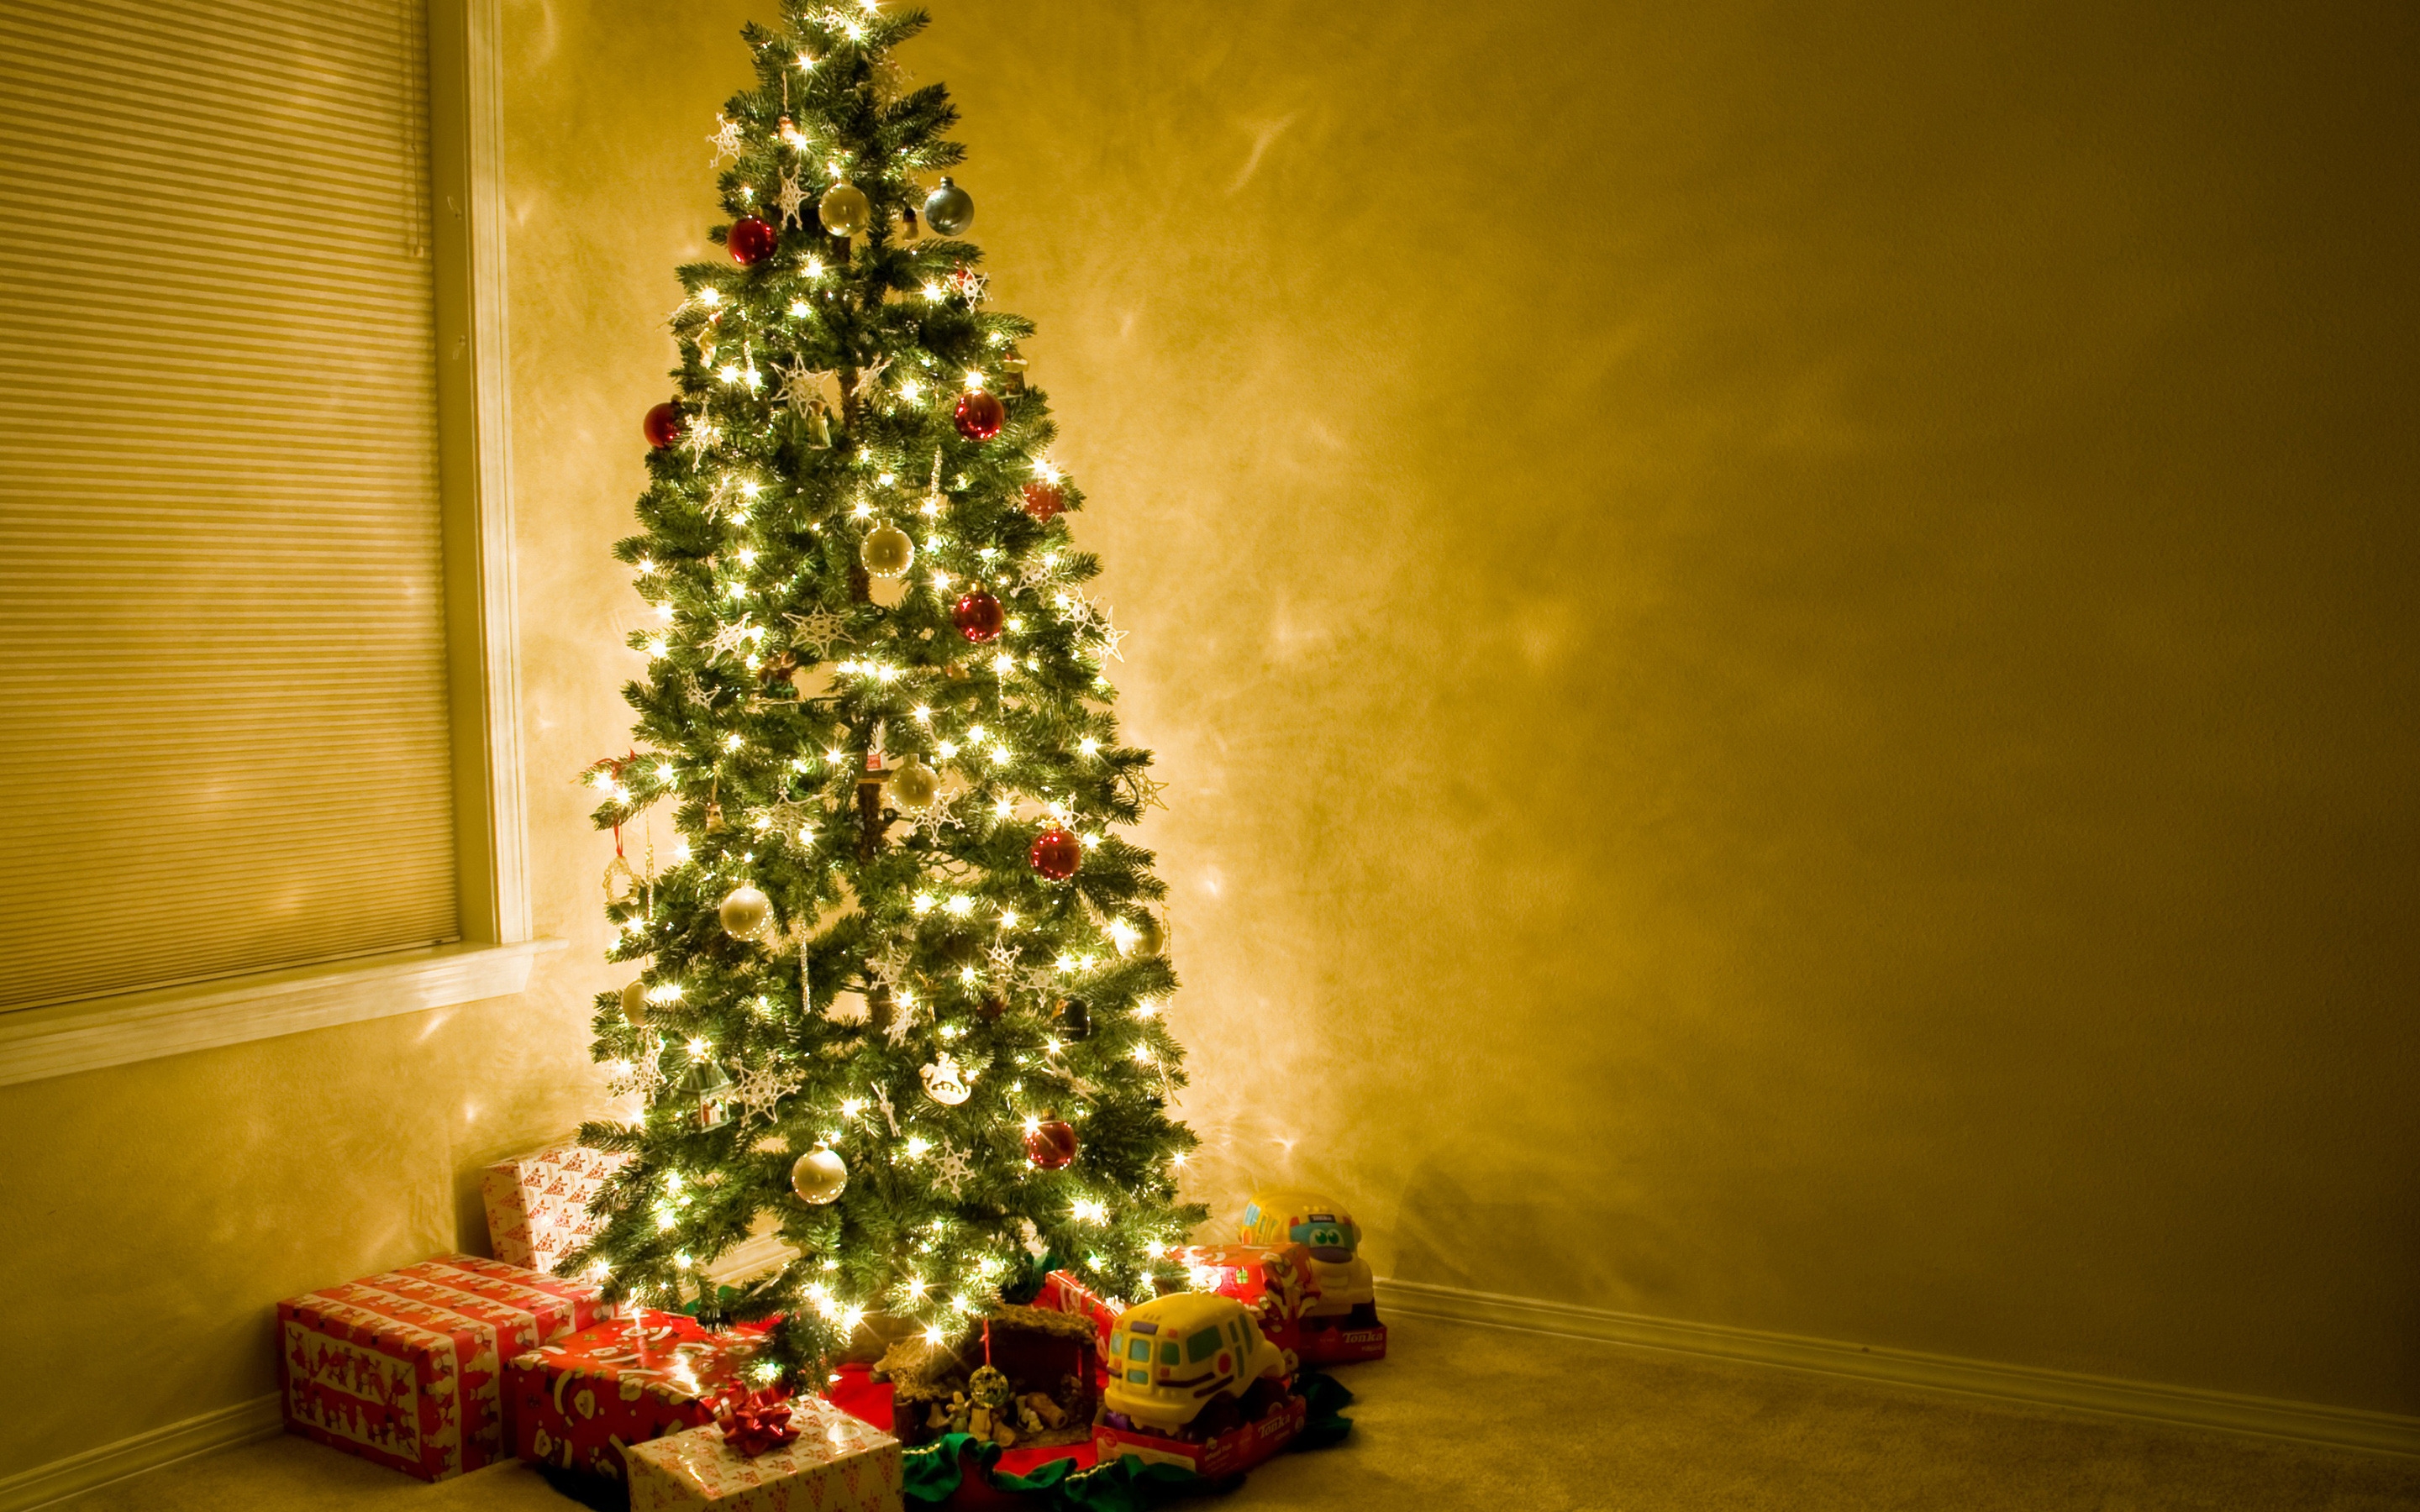 Christmas Tree Beautiful for 2880 x 1800 Retina Display resolution